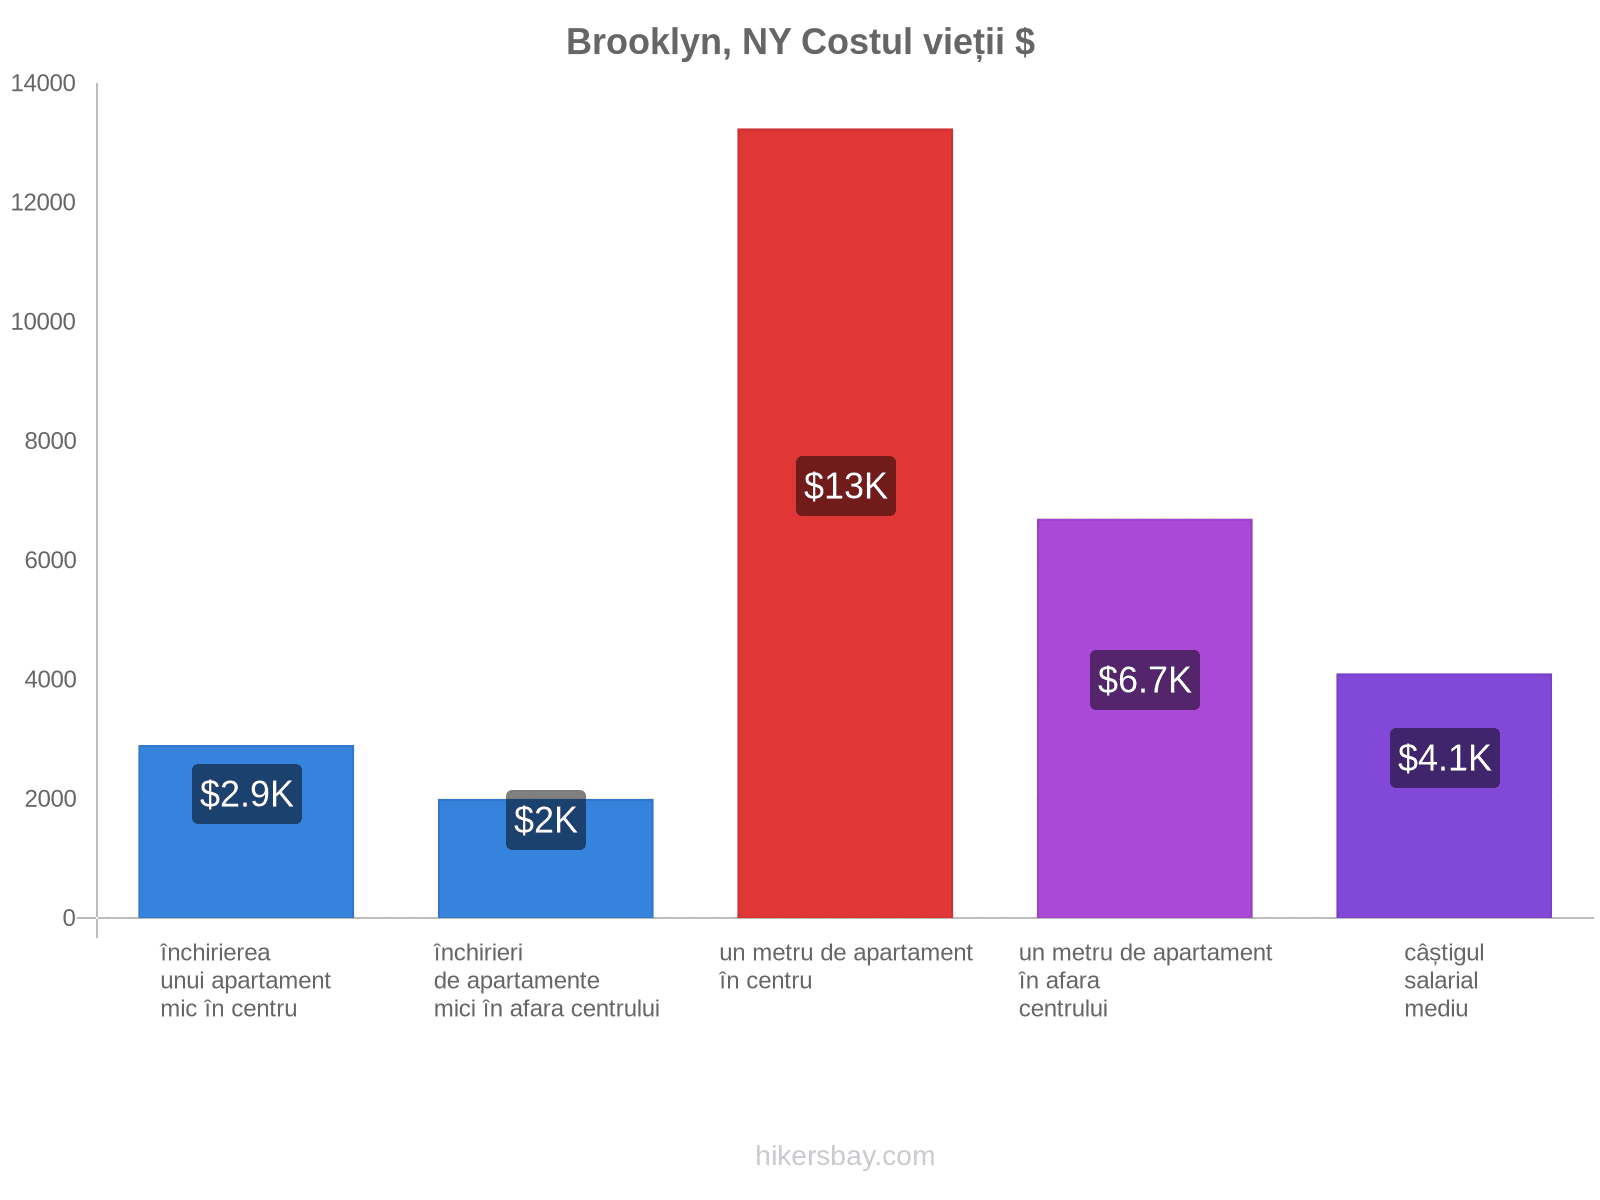 Brooklyn, NY costul vieții hikersbay.com